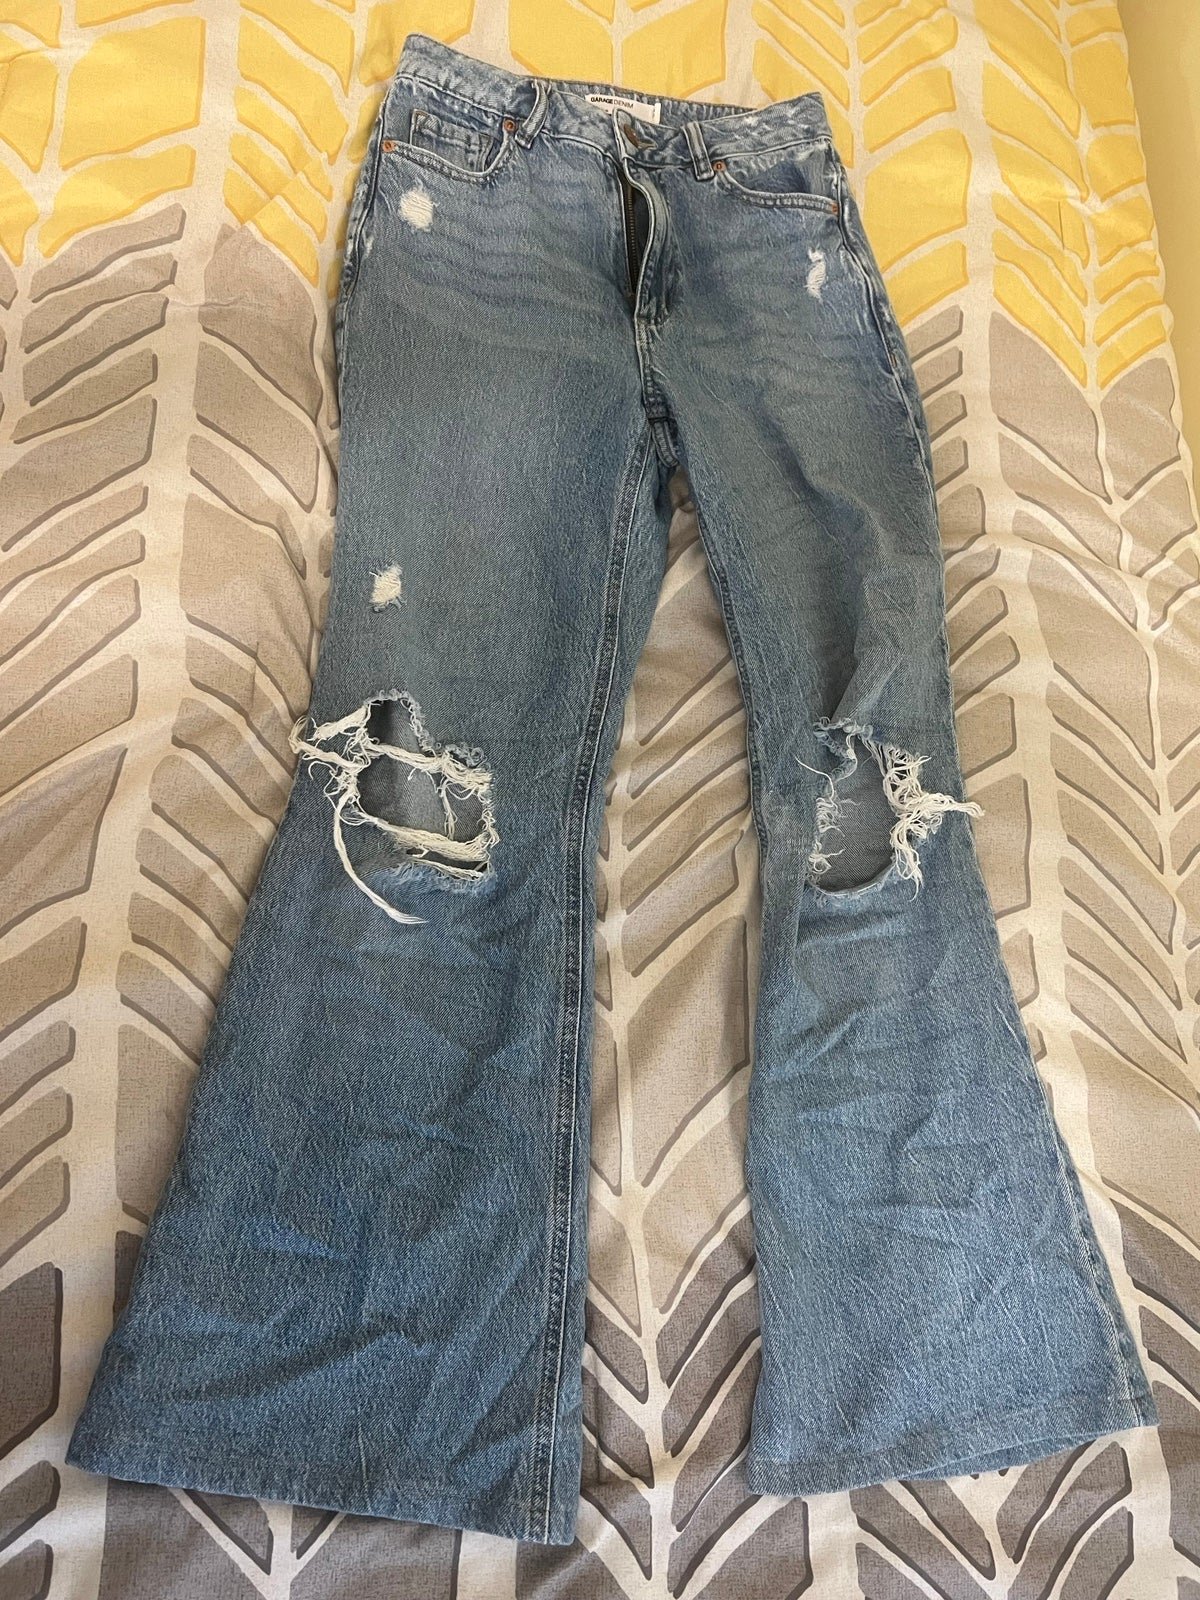 the Lowest price Garage Denim Flare Jeans 26 short FUJ4